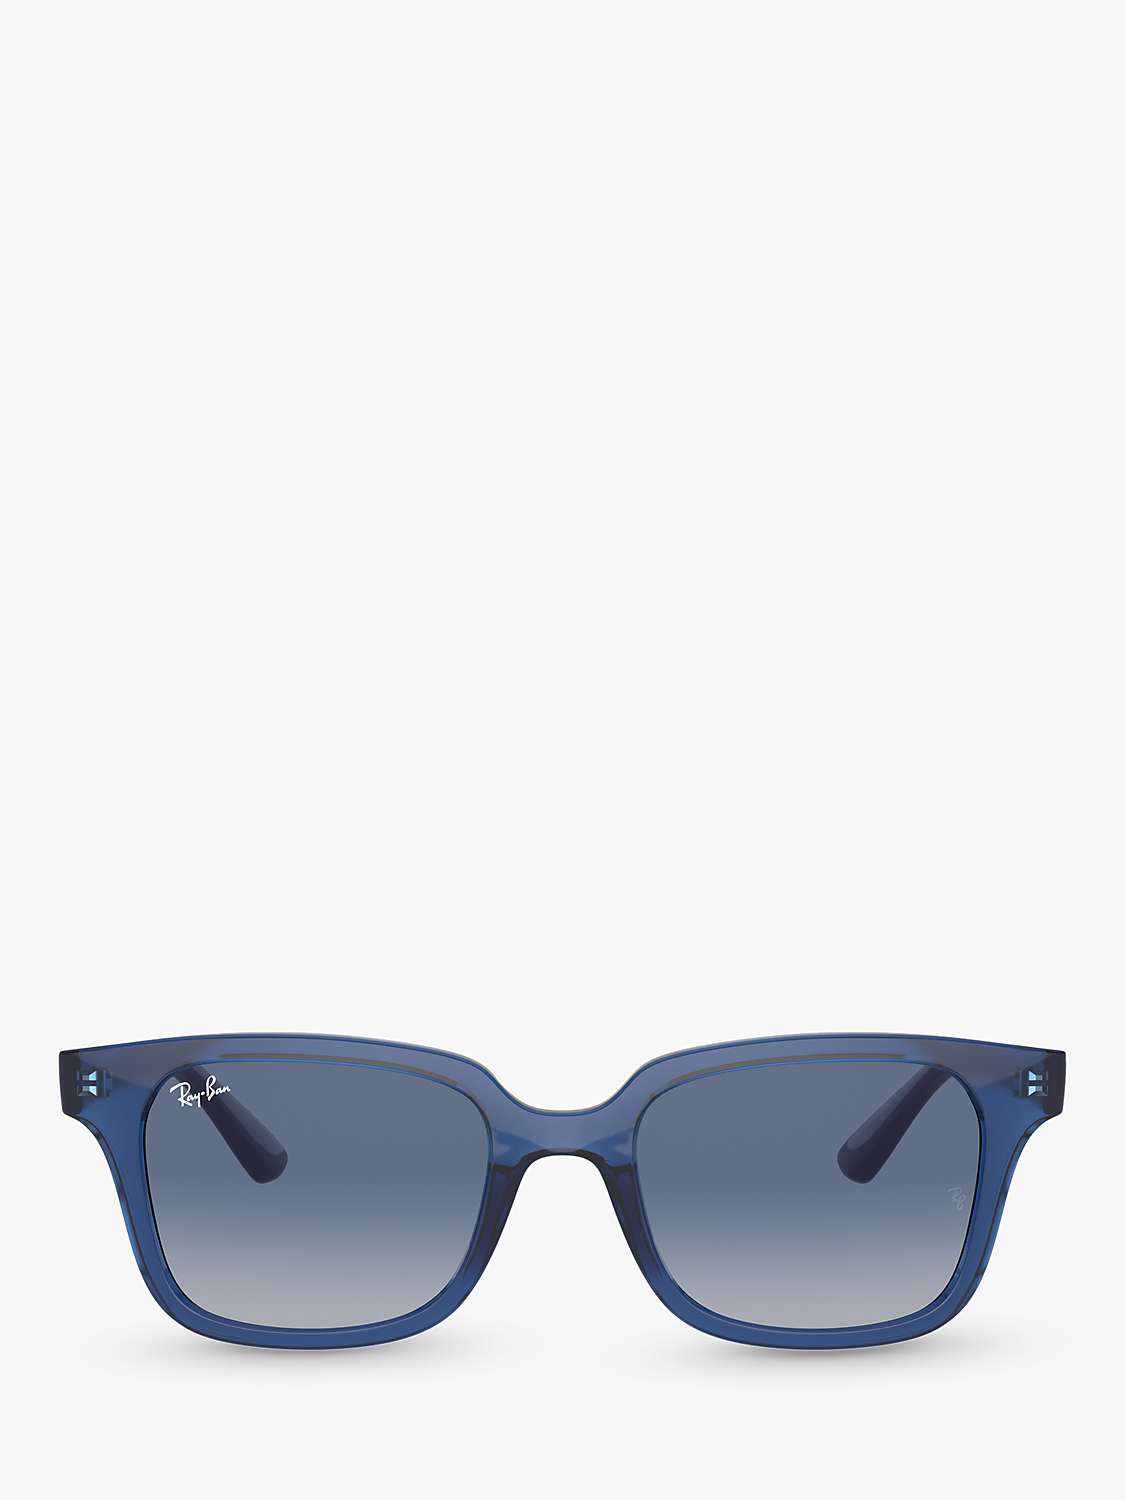 Buy Ray-Ban Junior RJ9071S Unisex Square Sunglasses, Blue/Blue Gradient Online at johnlewis.com